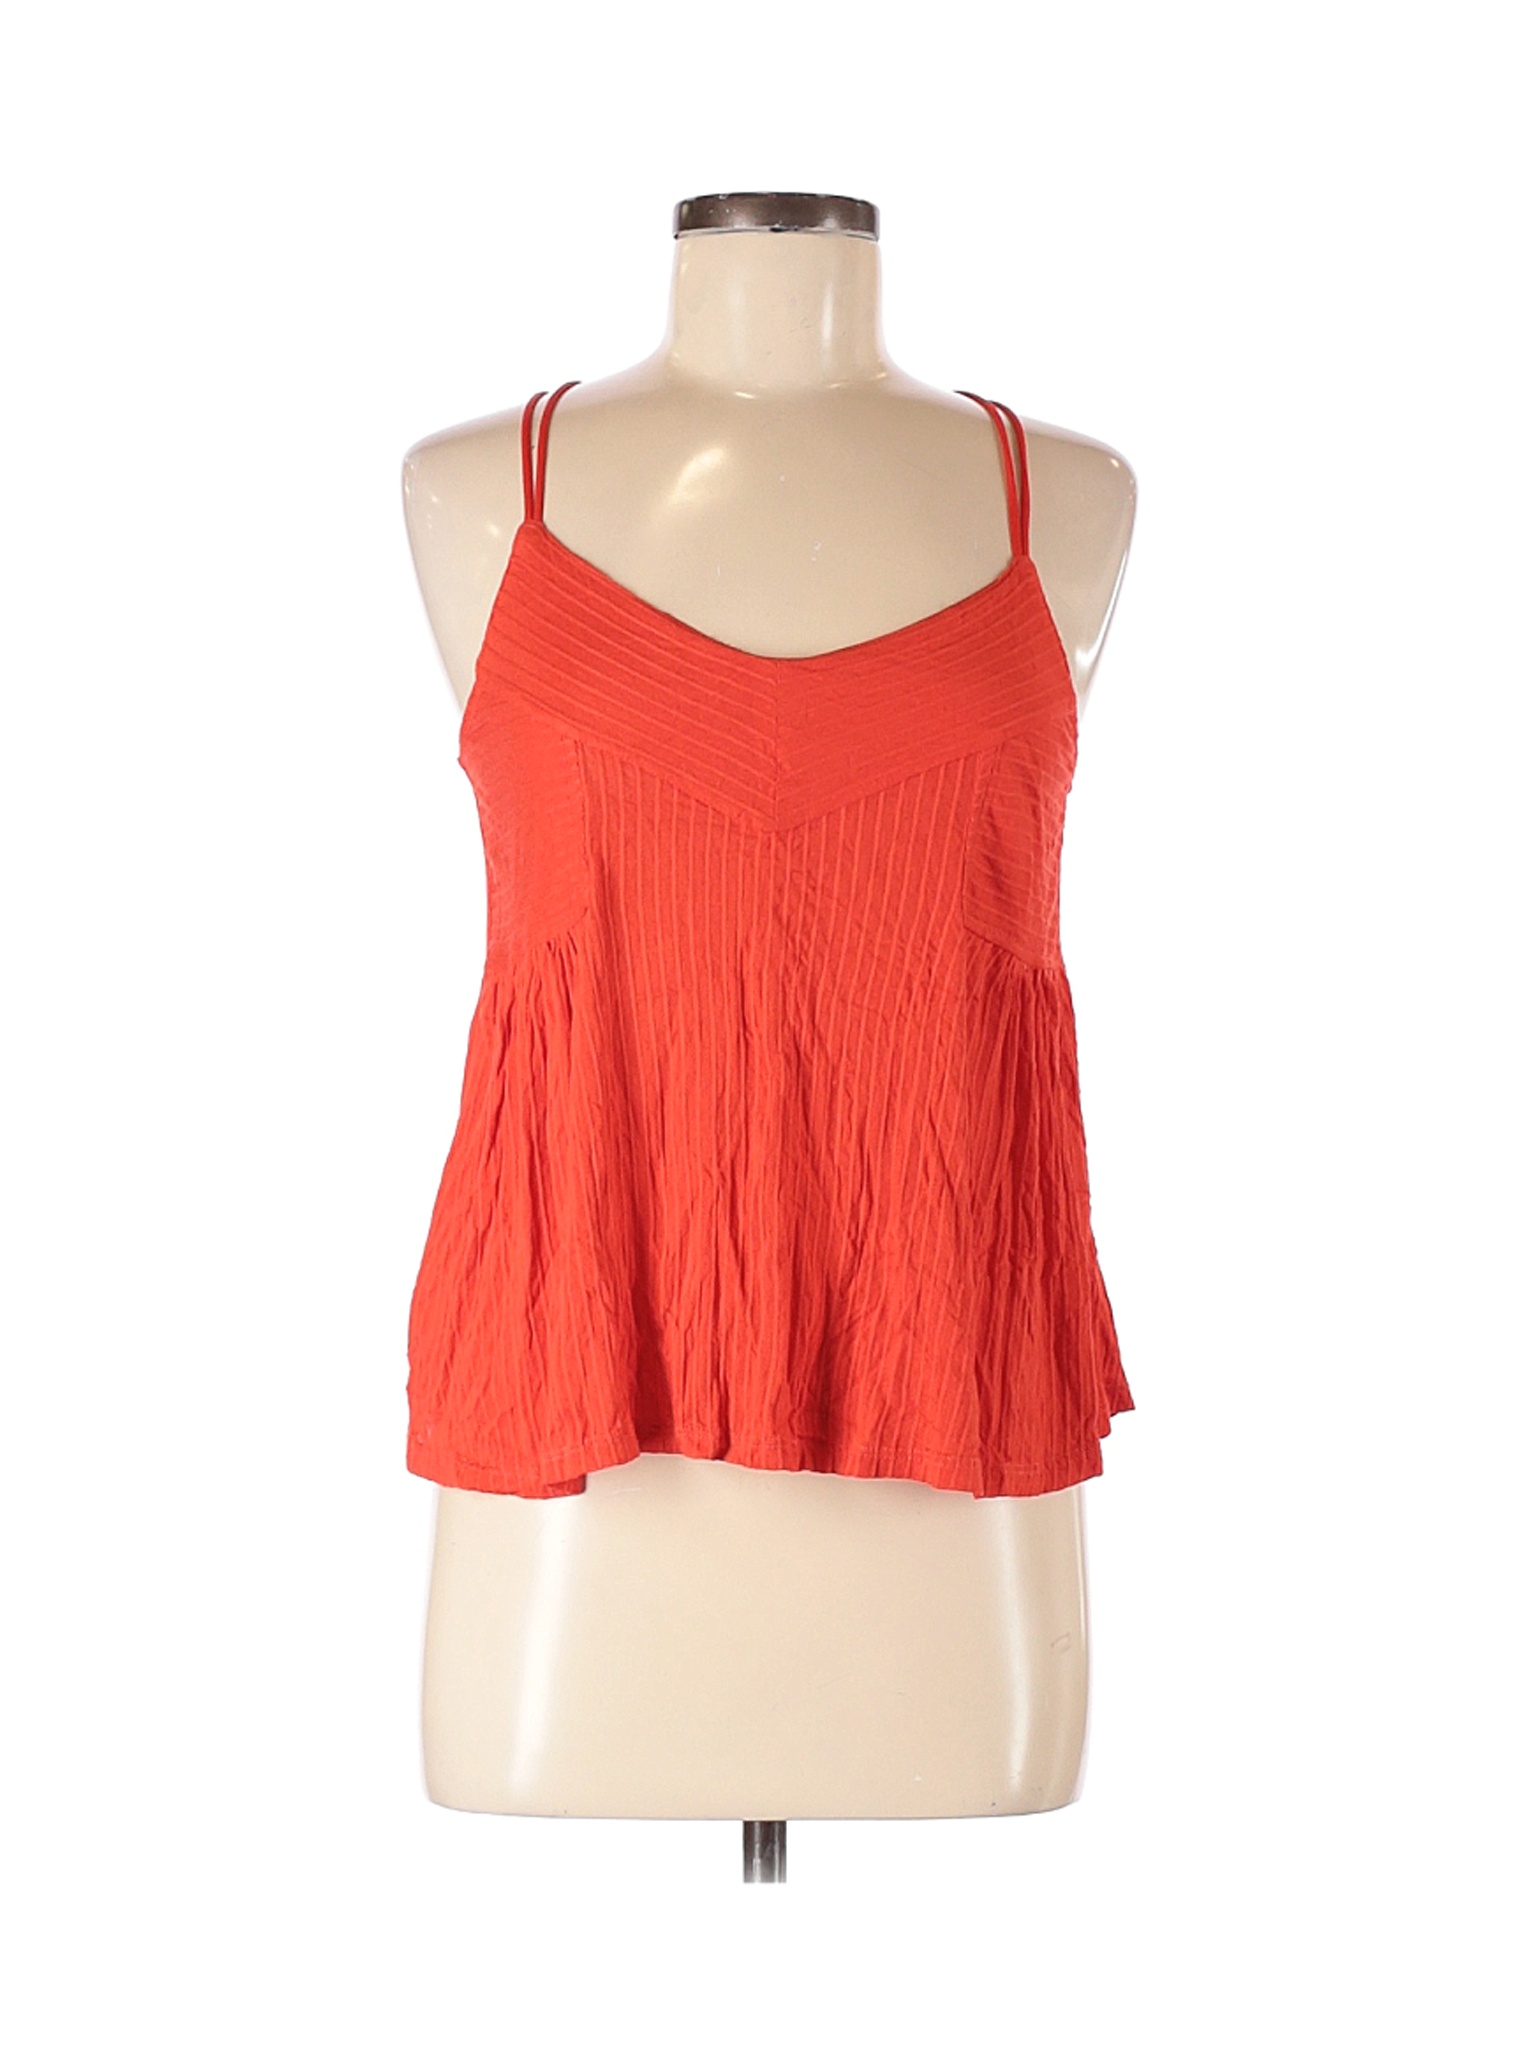 Mango Women Orange Sleeveless Top XS | eBay